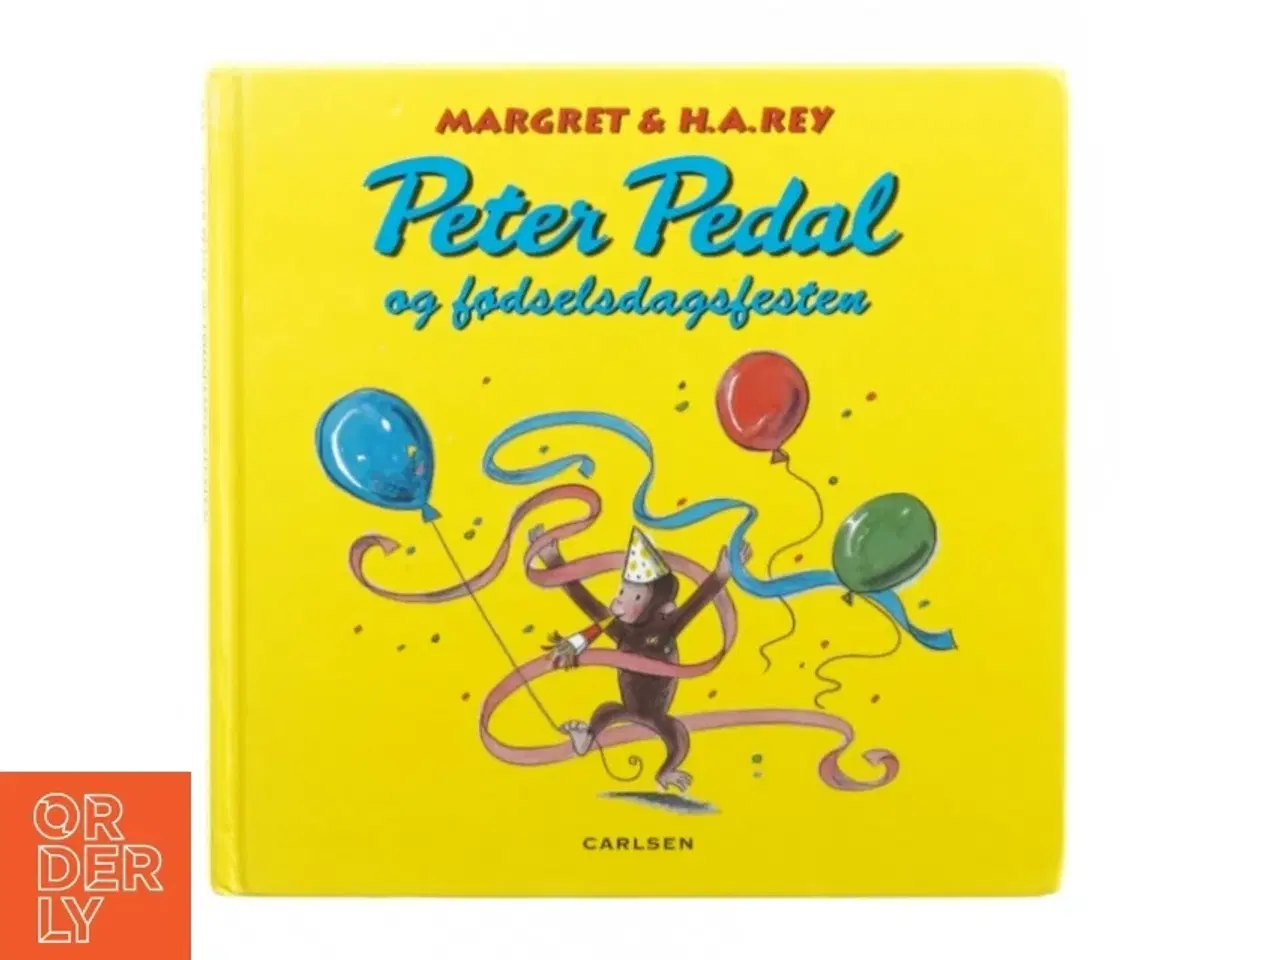 Billede 1 - Peter pedal og fødselsdagsfesten fra Karlsen Egmont (str. 21 x 20 cm)